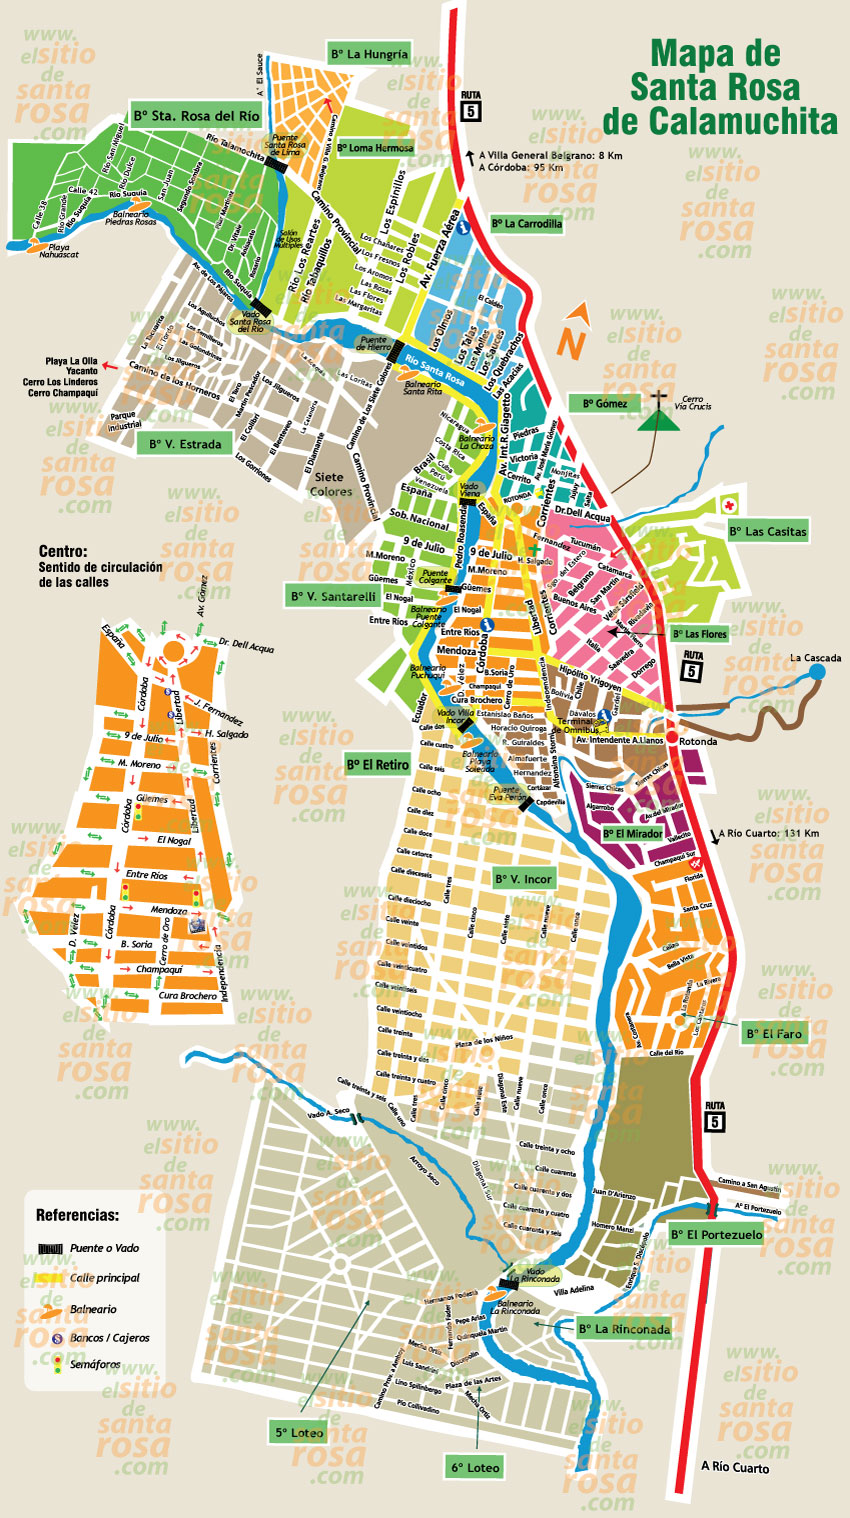 Mapa de Santa Rosa de Calamuchita